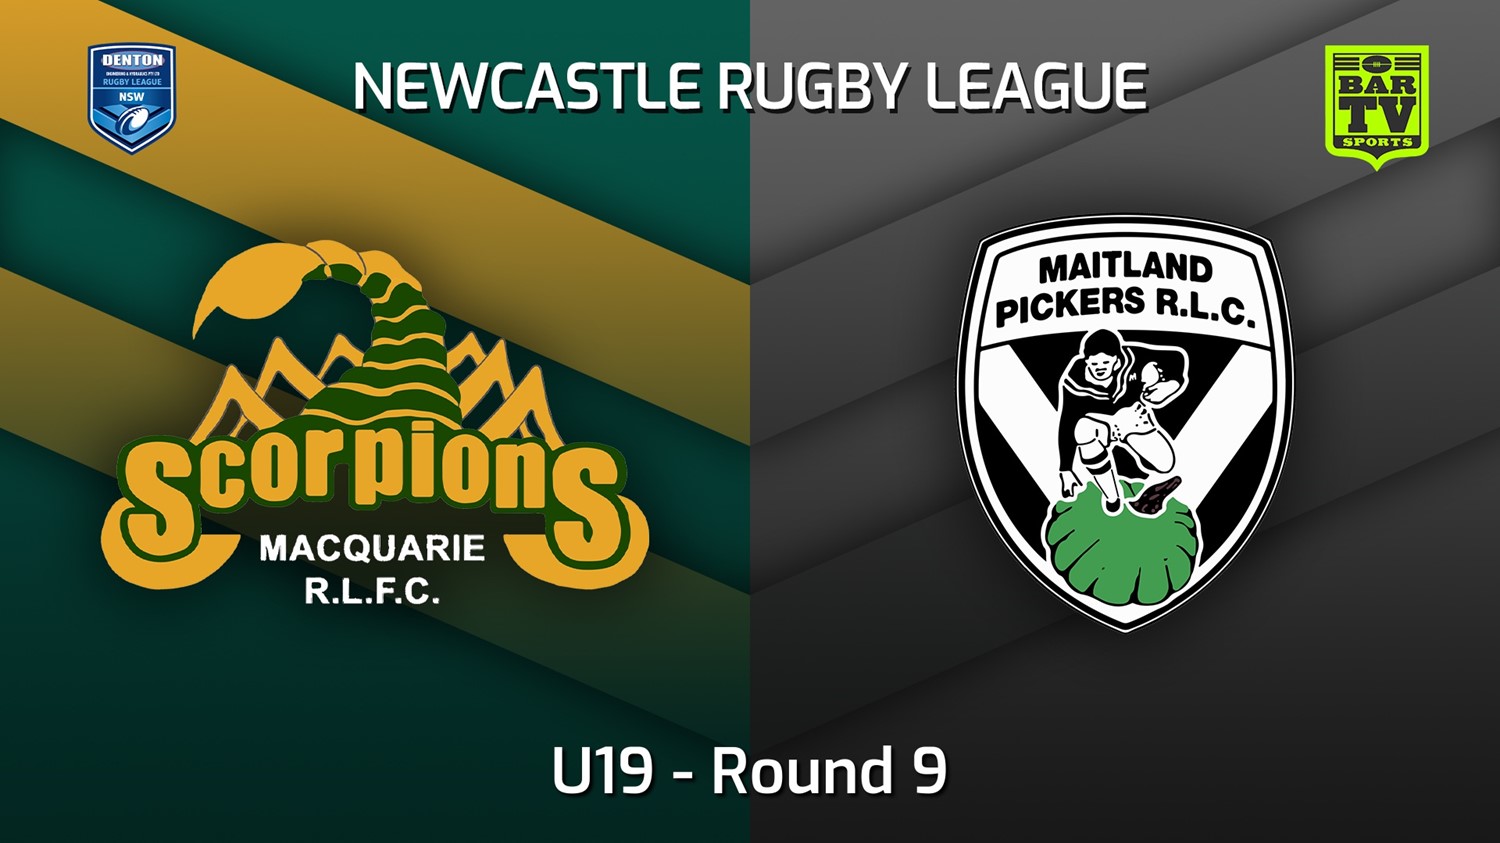 220528-Newcastle Round 9 - U19 - Macquarie Scorpions v Maitland Pickers Slate Image